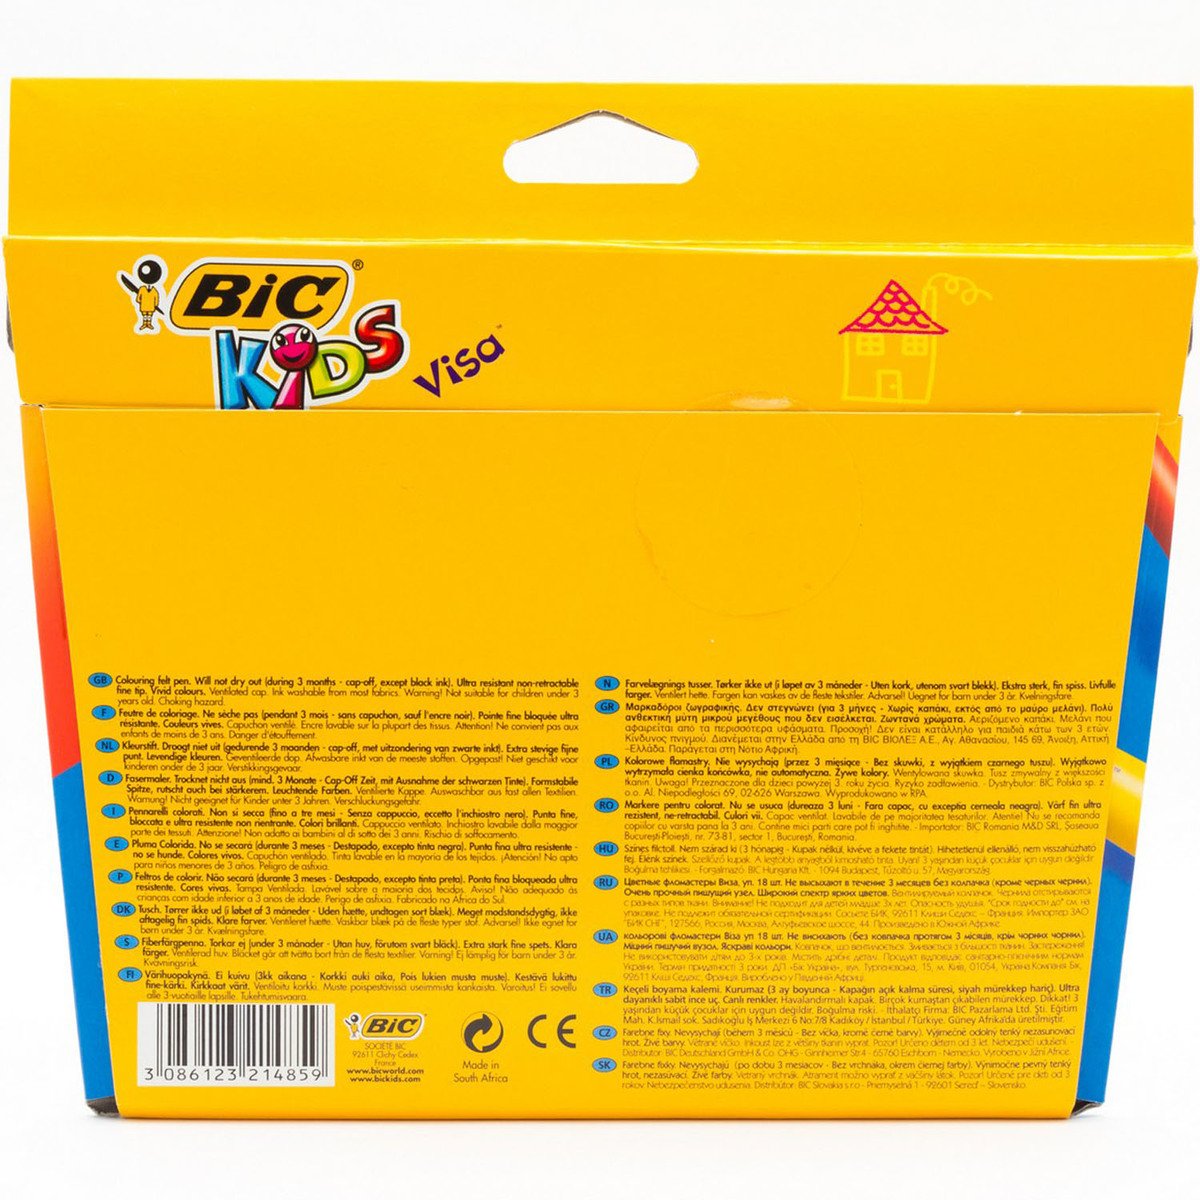 Bic Kids Visa Coloring Felt Pen 18's 960